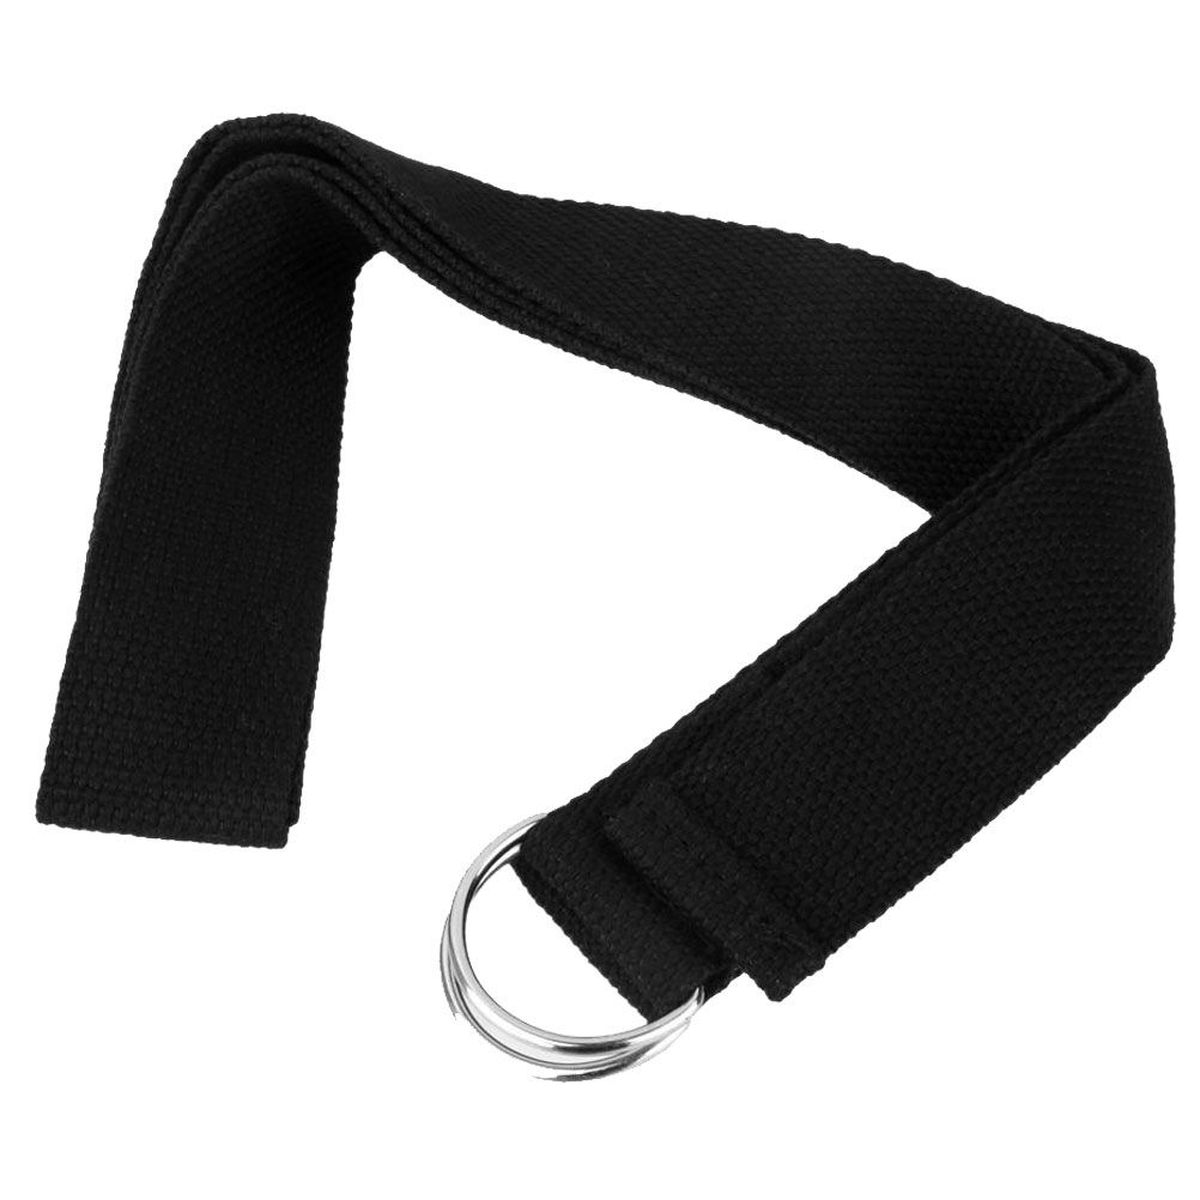 Yoga strap D-ring black cotton